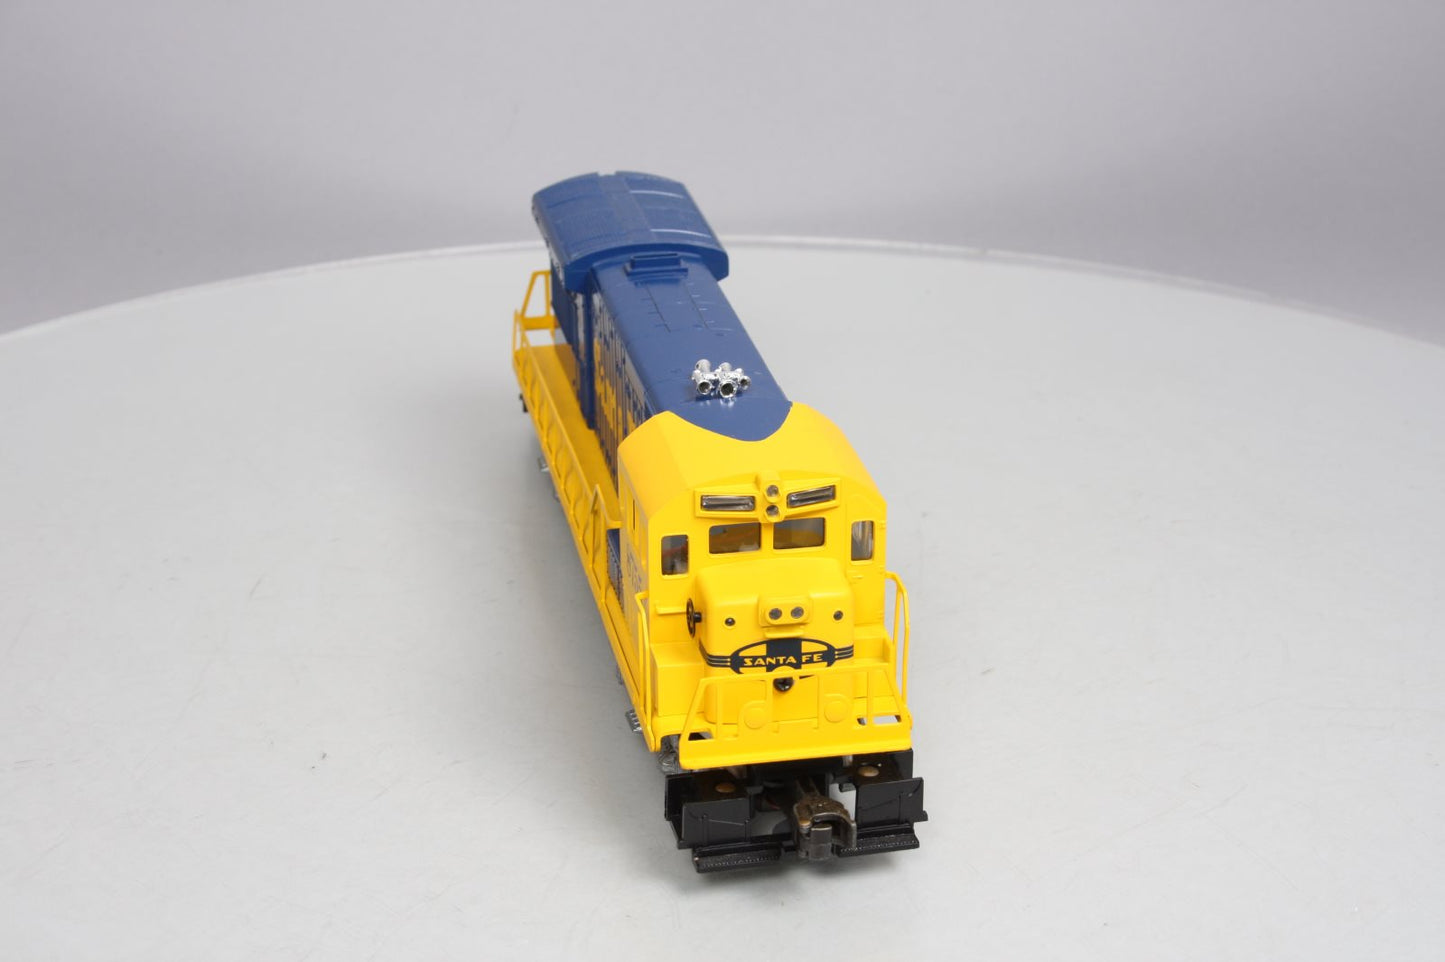 Lionel 6-8755 Santa Fe U36B Diesel Locomotive EX/Box